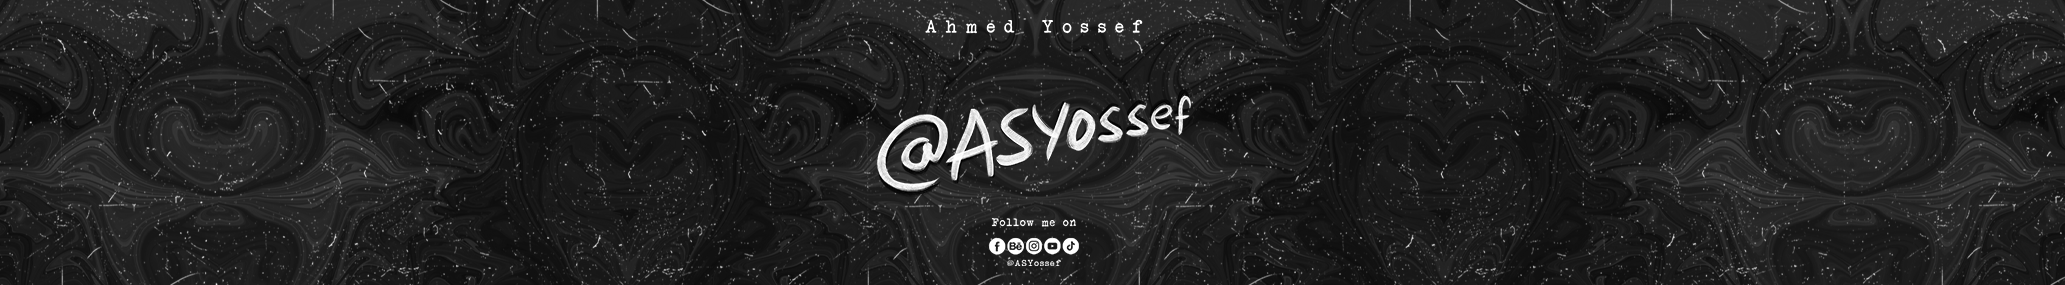 Profilbanneret til Ahmed S. Yossef